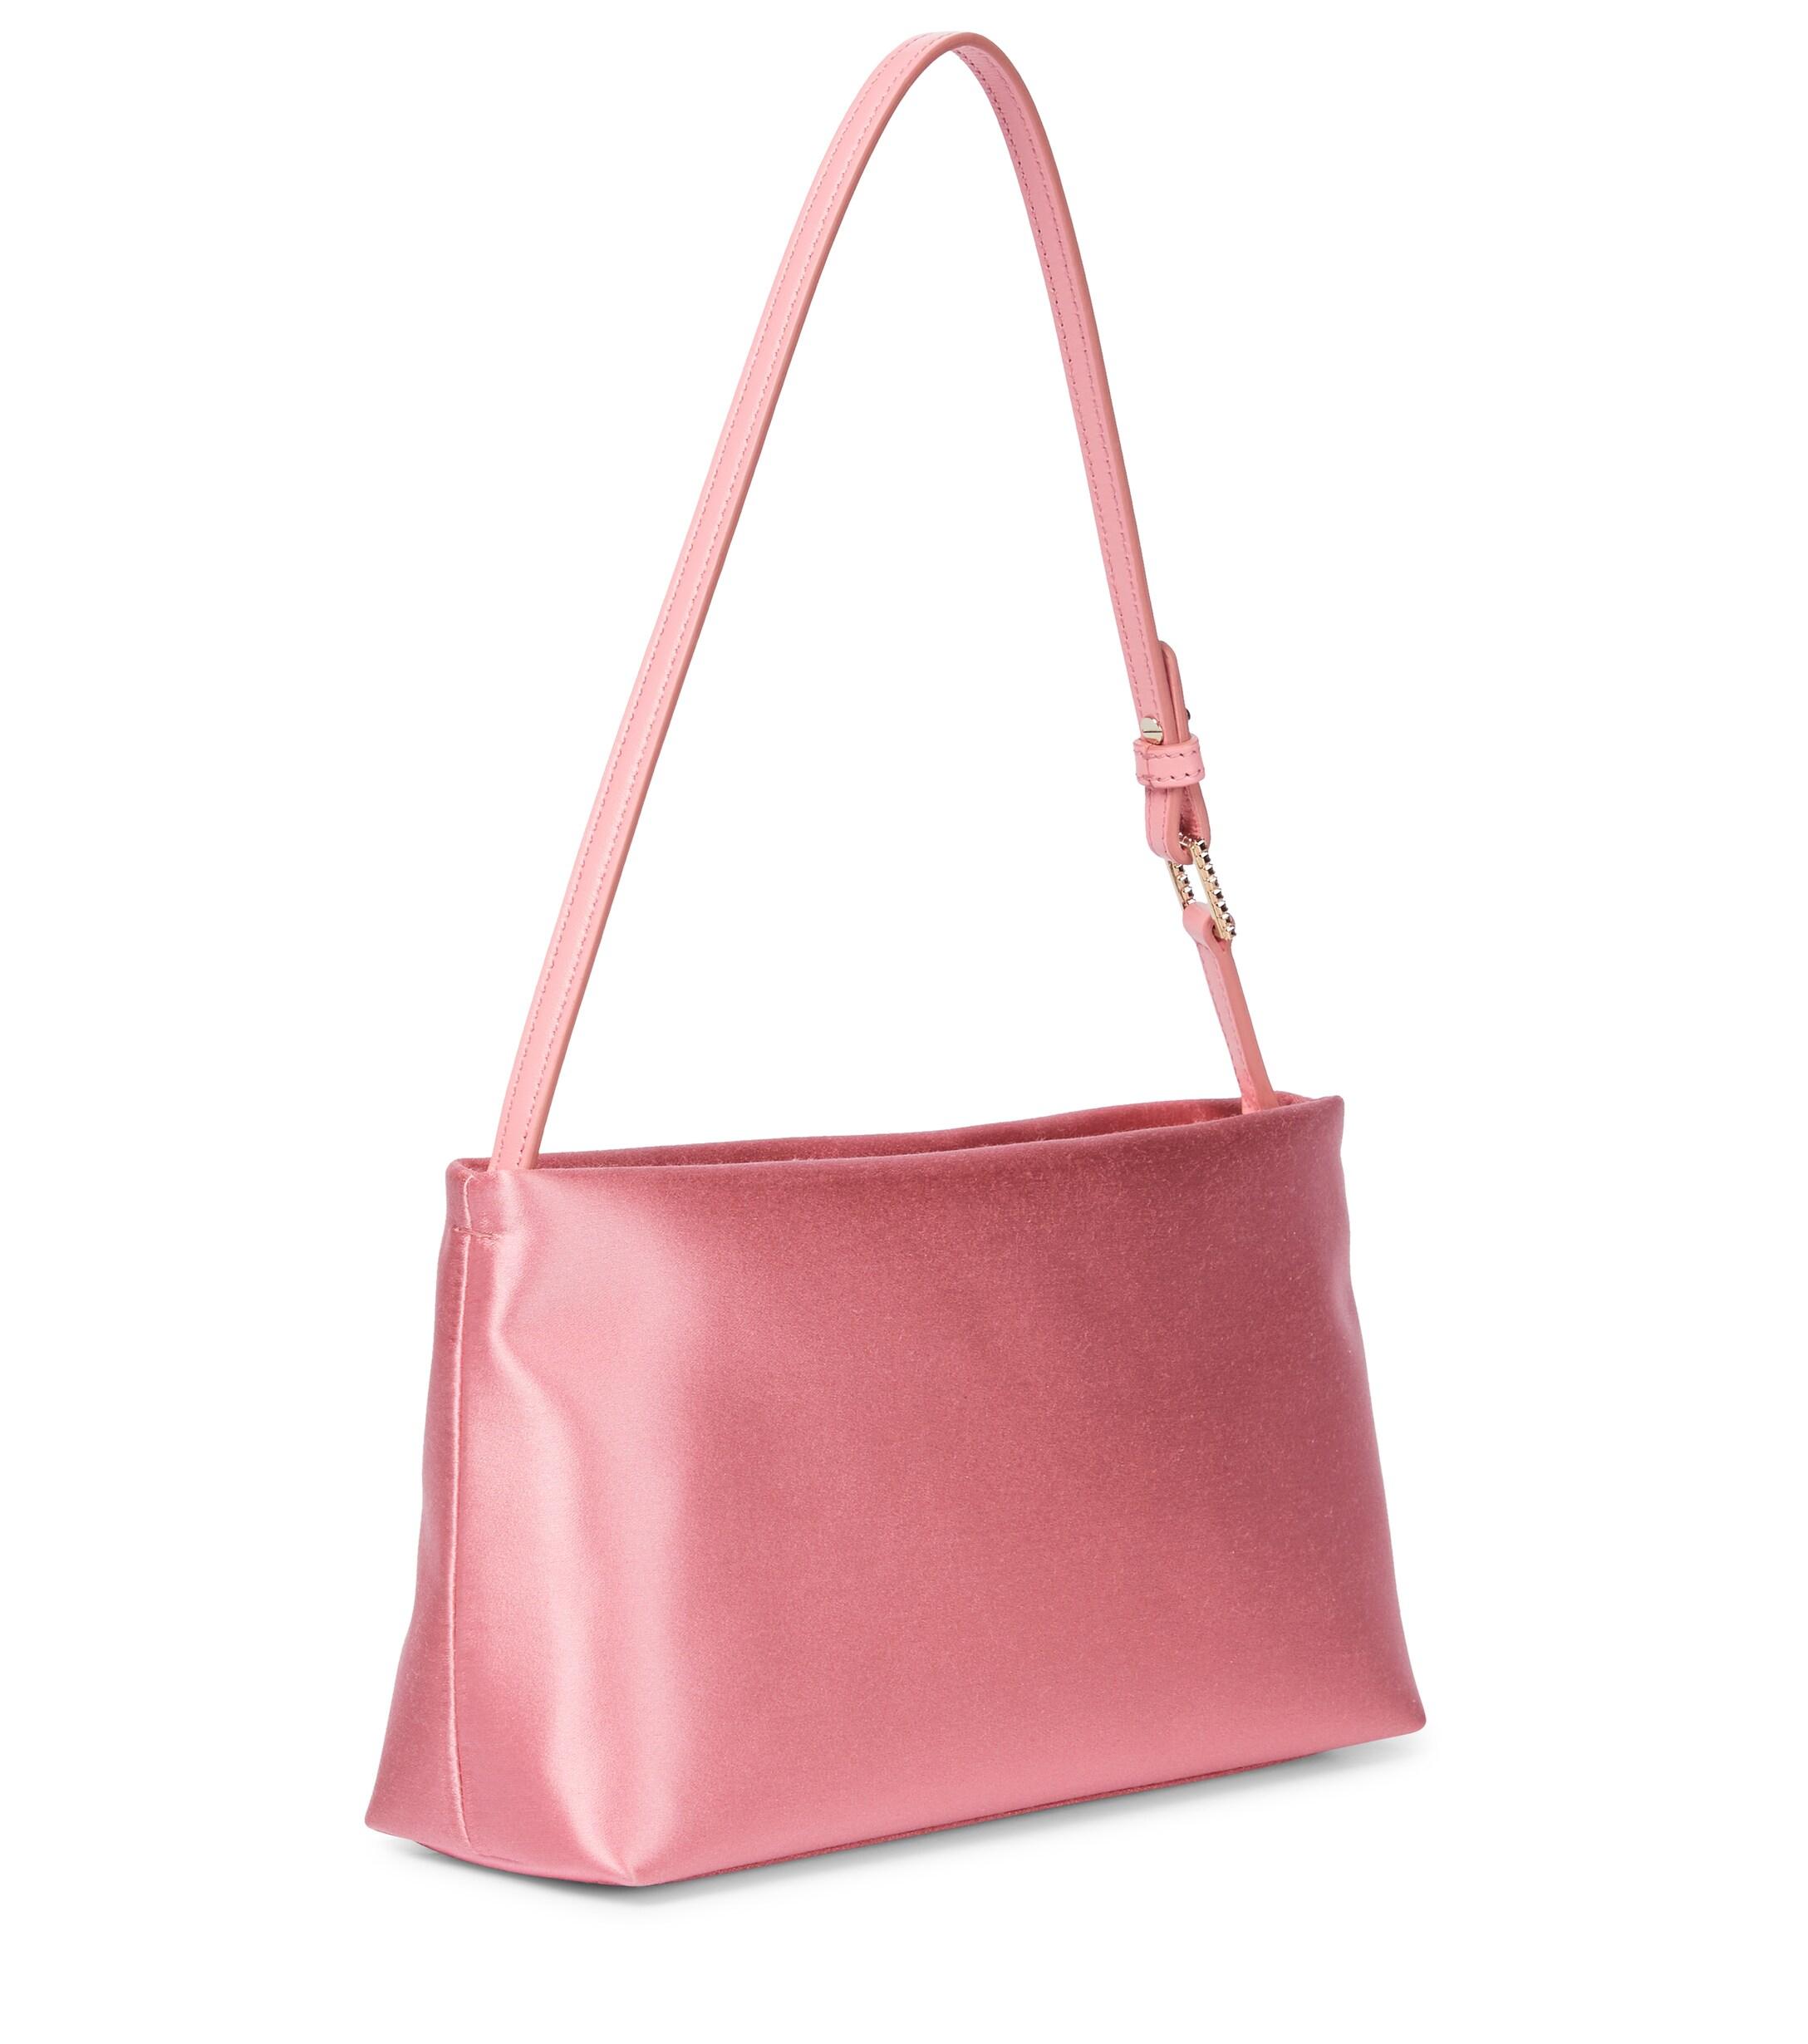 Roger Vivier Rv Nightlily Mini Satin Shoulder Bag in Pink - Lyst